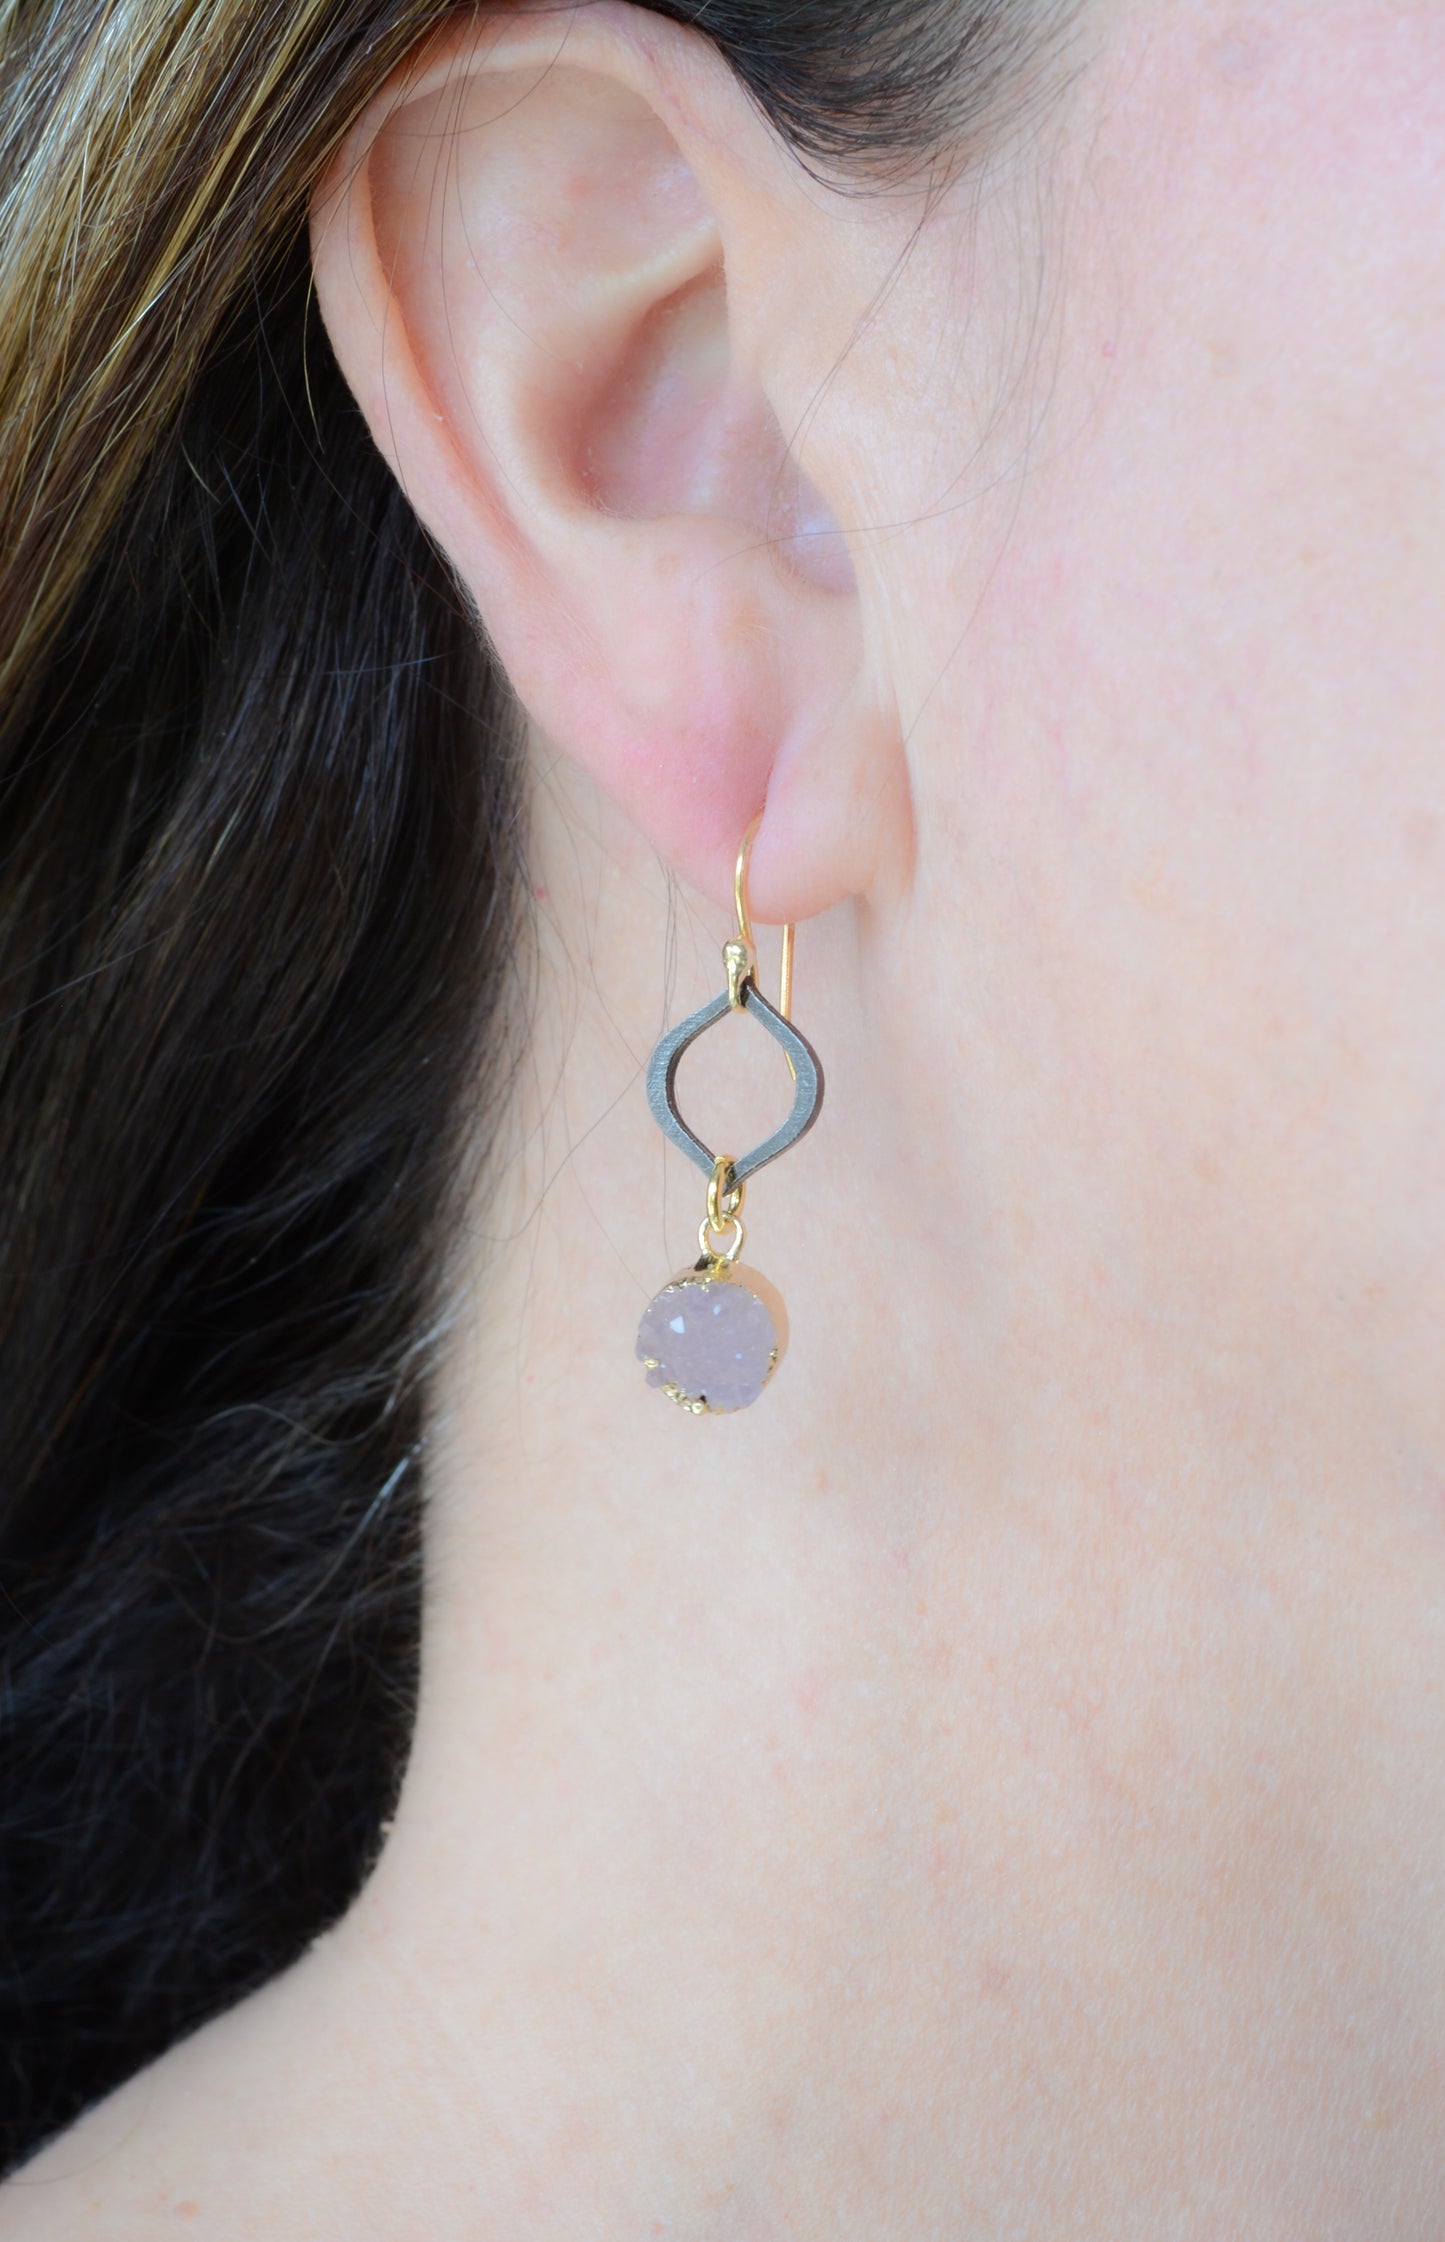 Two-tone mini lotus earrings with druzy stones